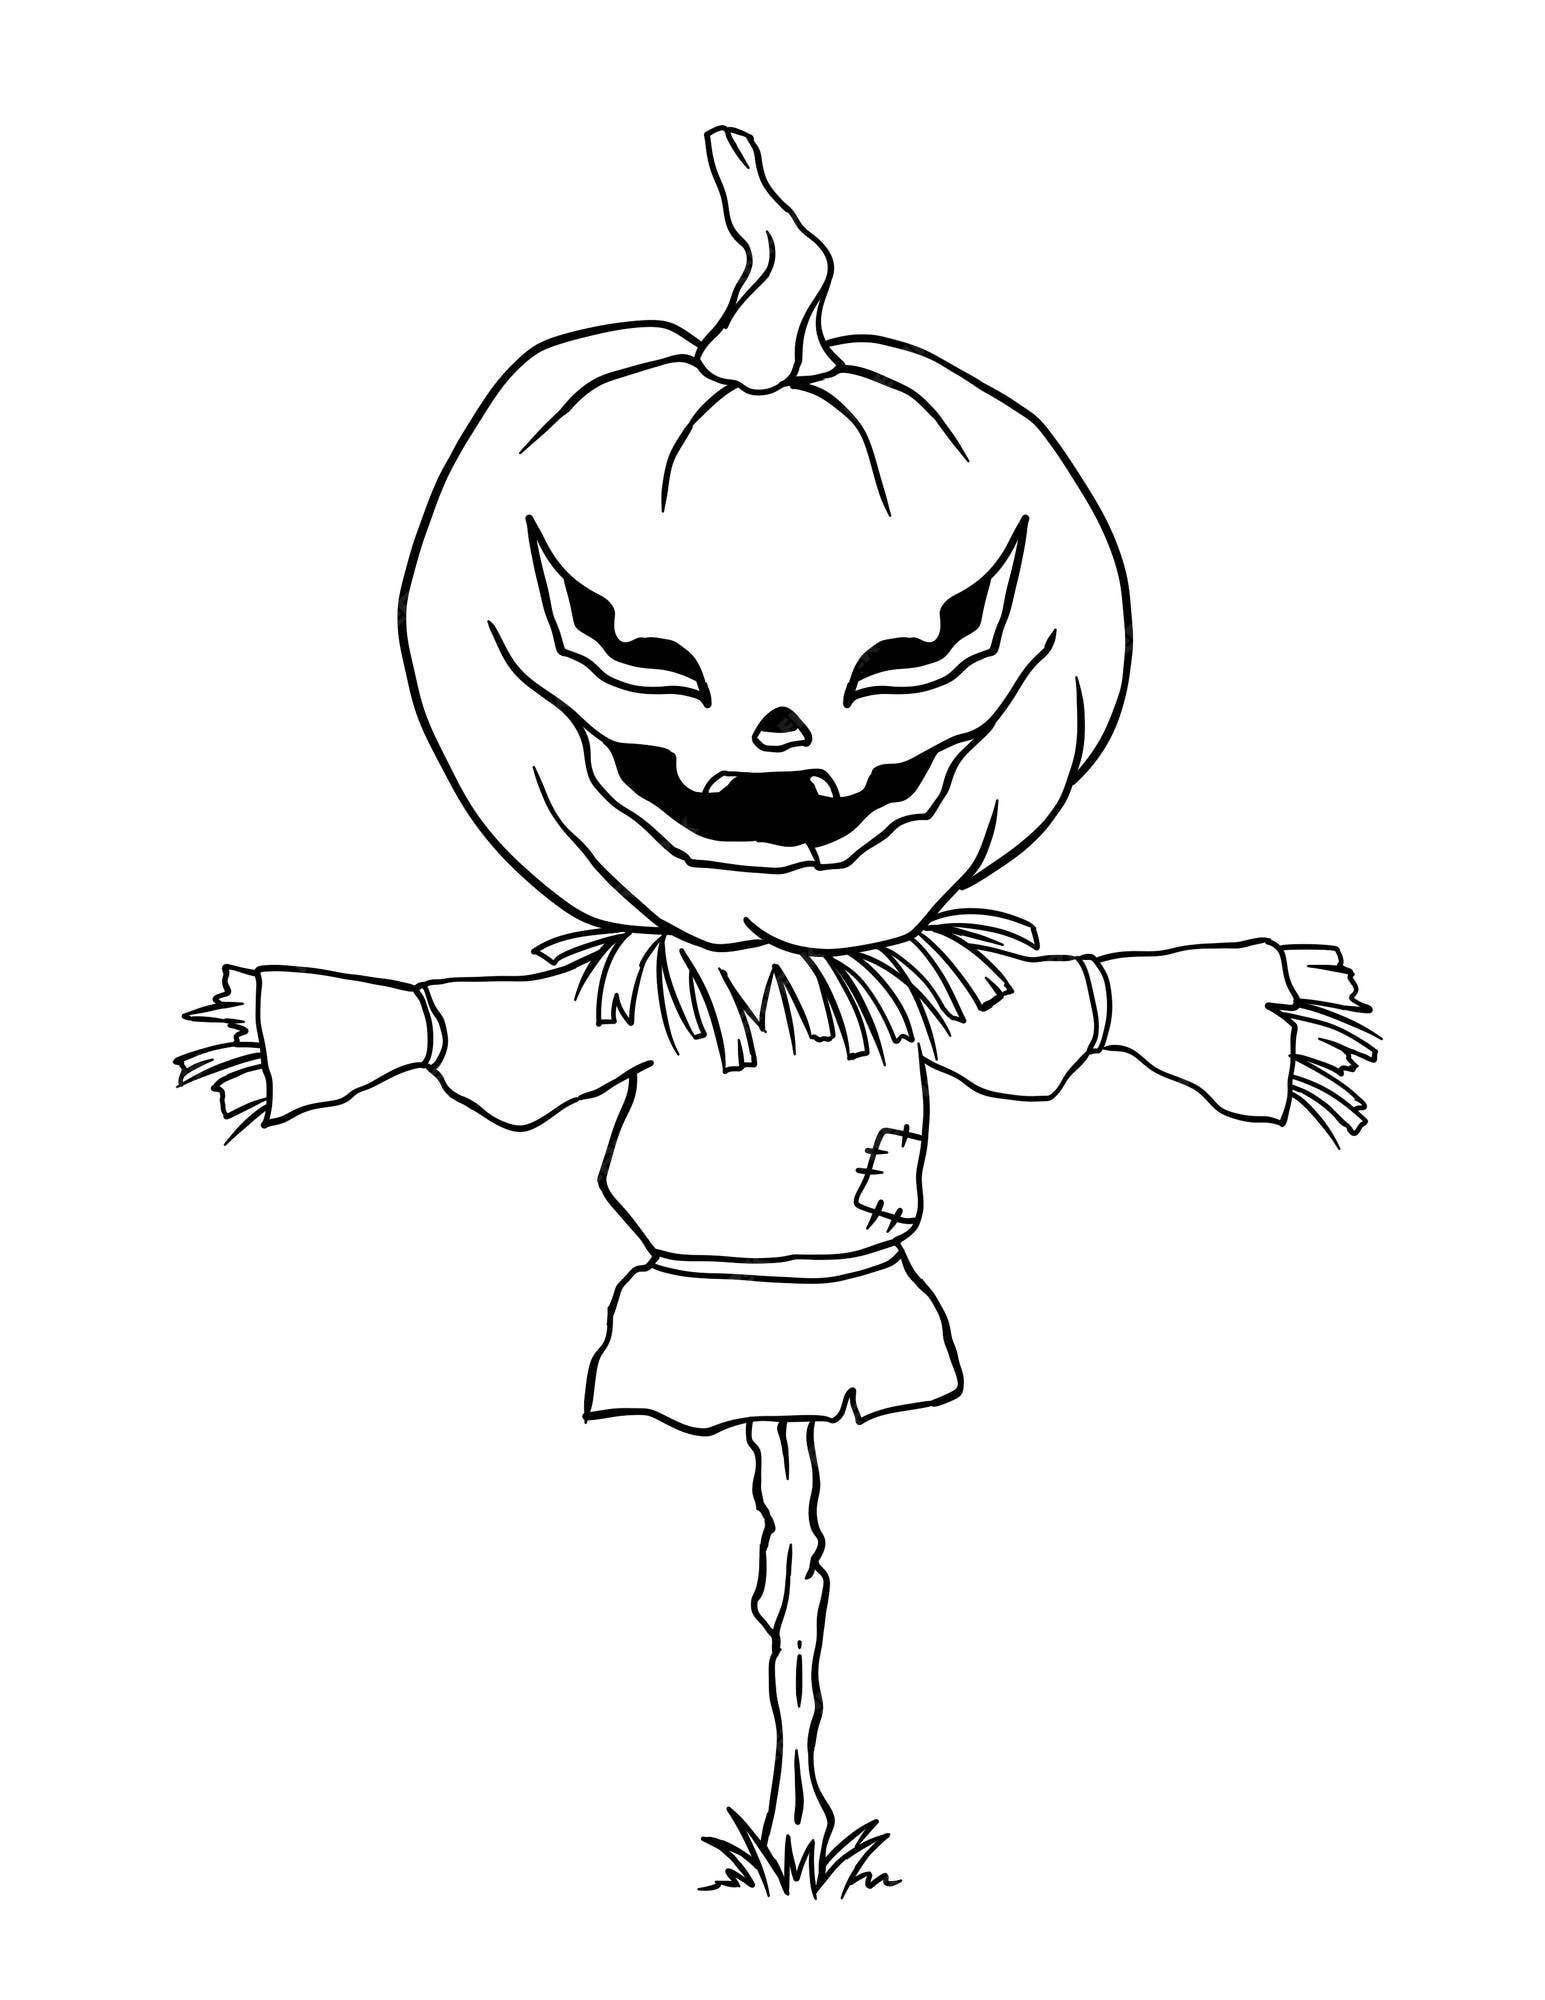 Premium Vector | Pumpkin scarecrow halloween coloring page